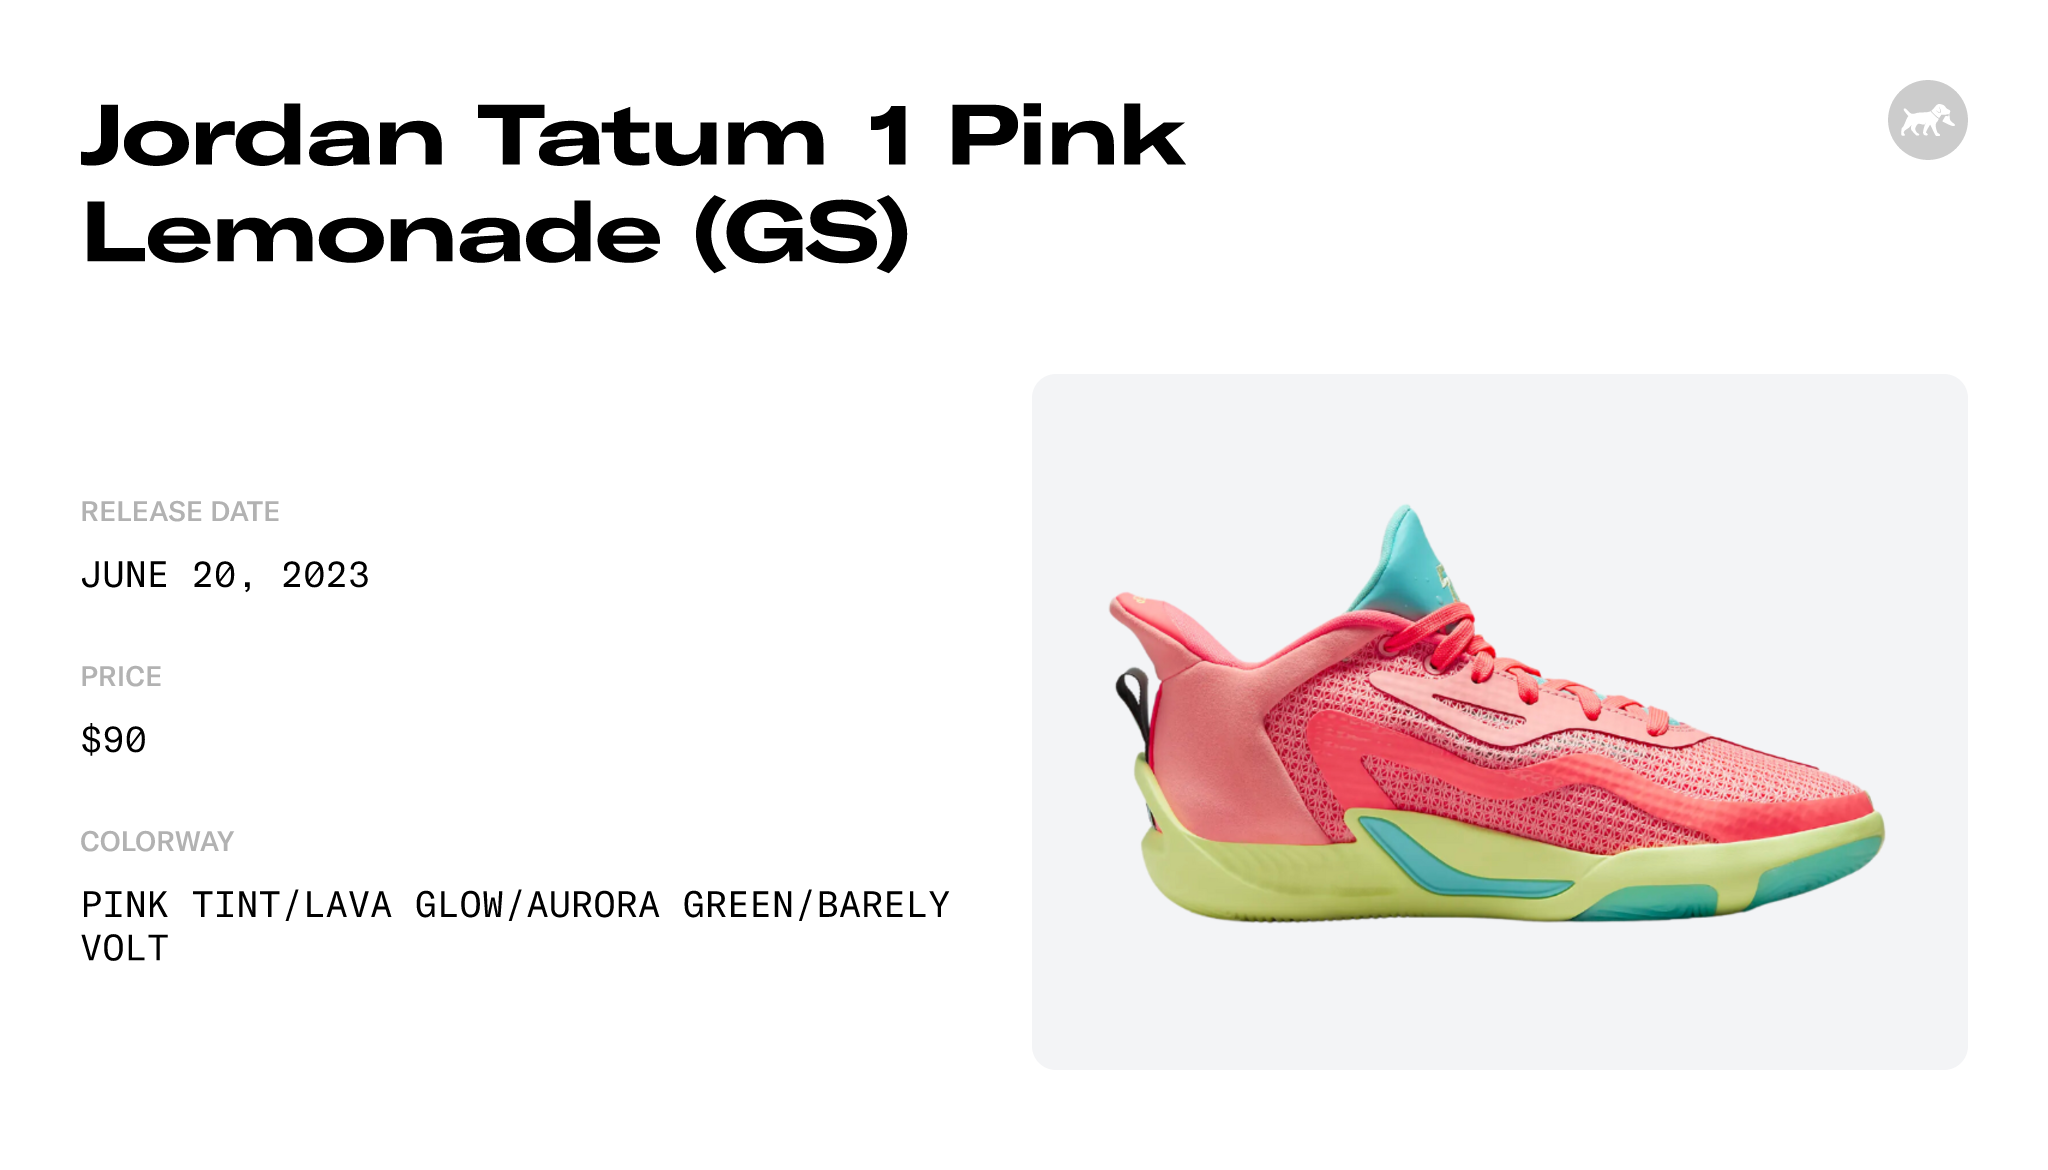 GS) Air Jordan Tatum 1 'Pink Lemonade' DX5359-600 - KICKS CREW